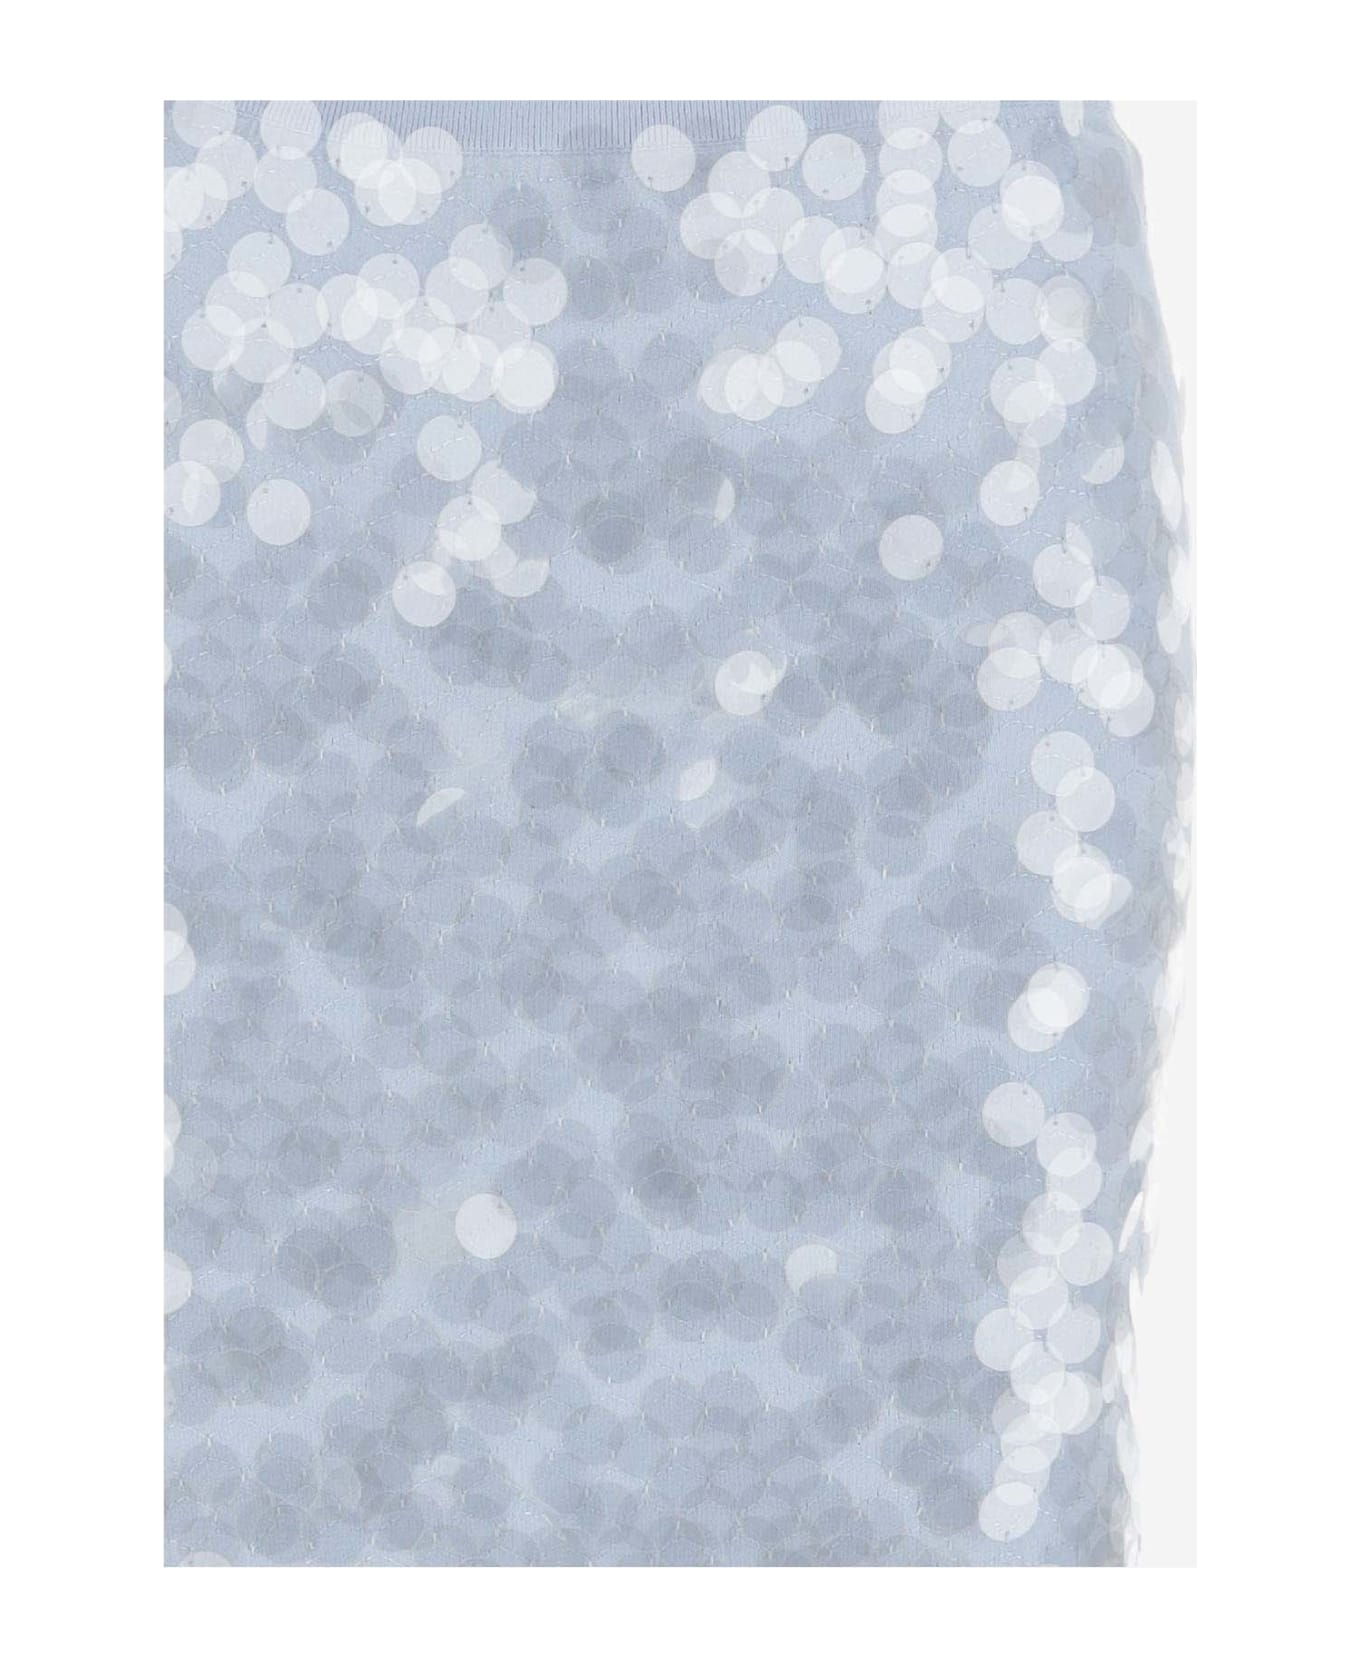 N.21 Sequined Cotton Skirt - Light Blue